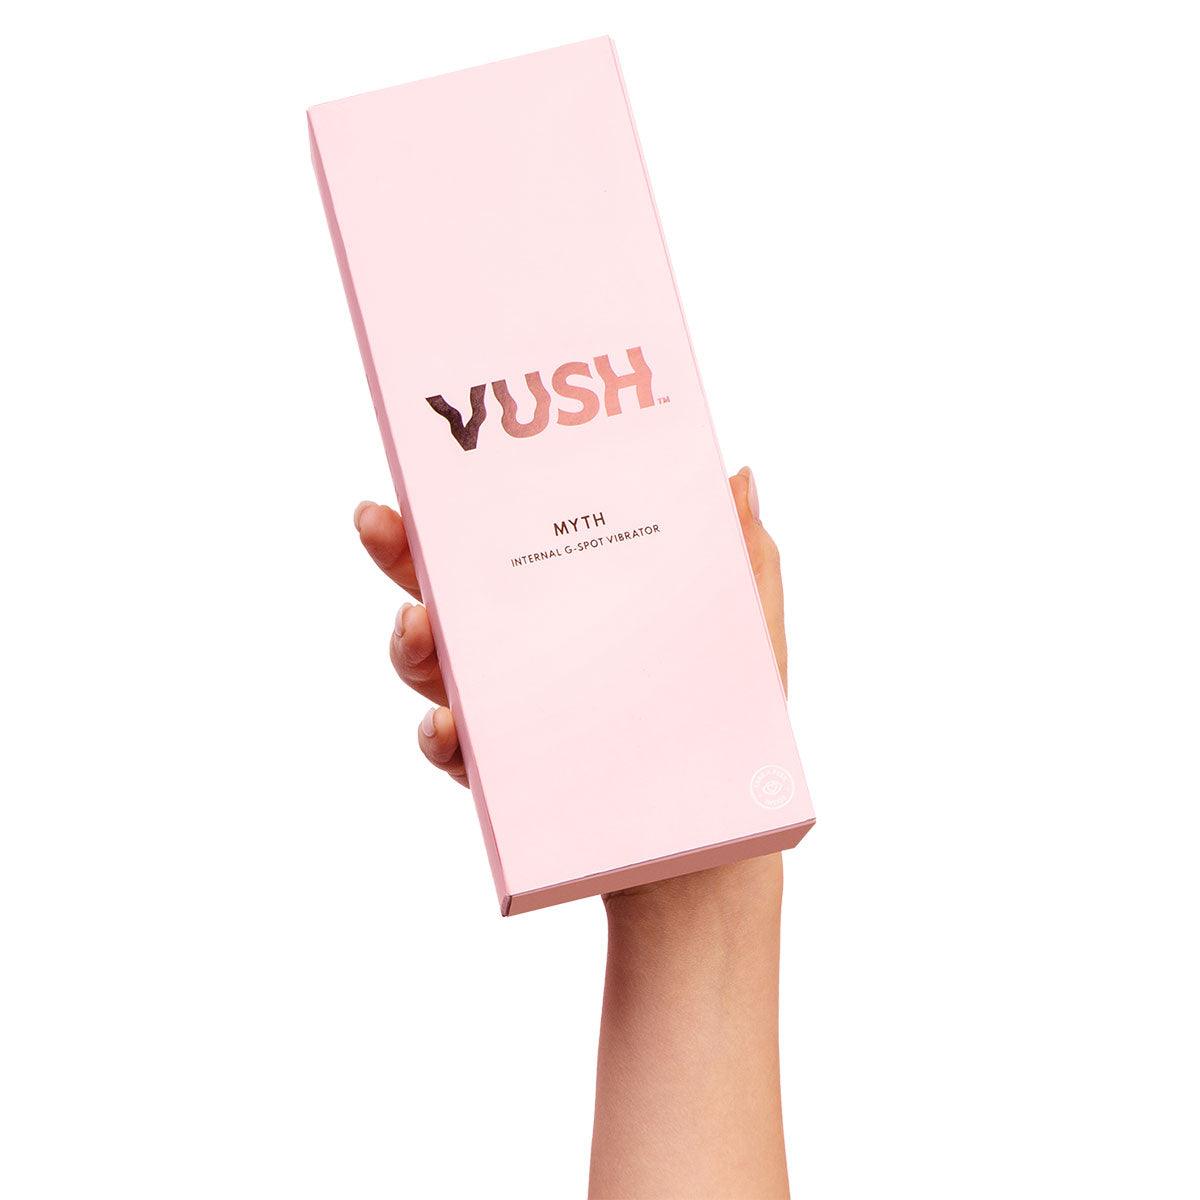 VUSH Myth G-Spot Vibrator - Buy At Luxury Toy X - Free 3-Day Shipping